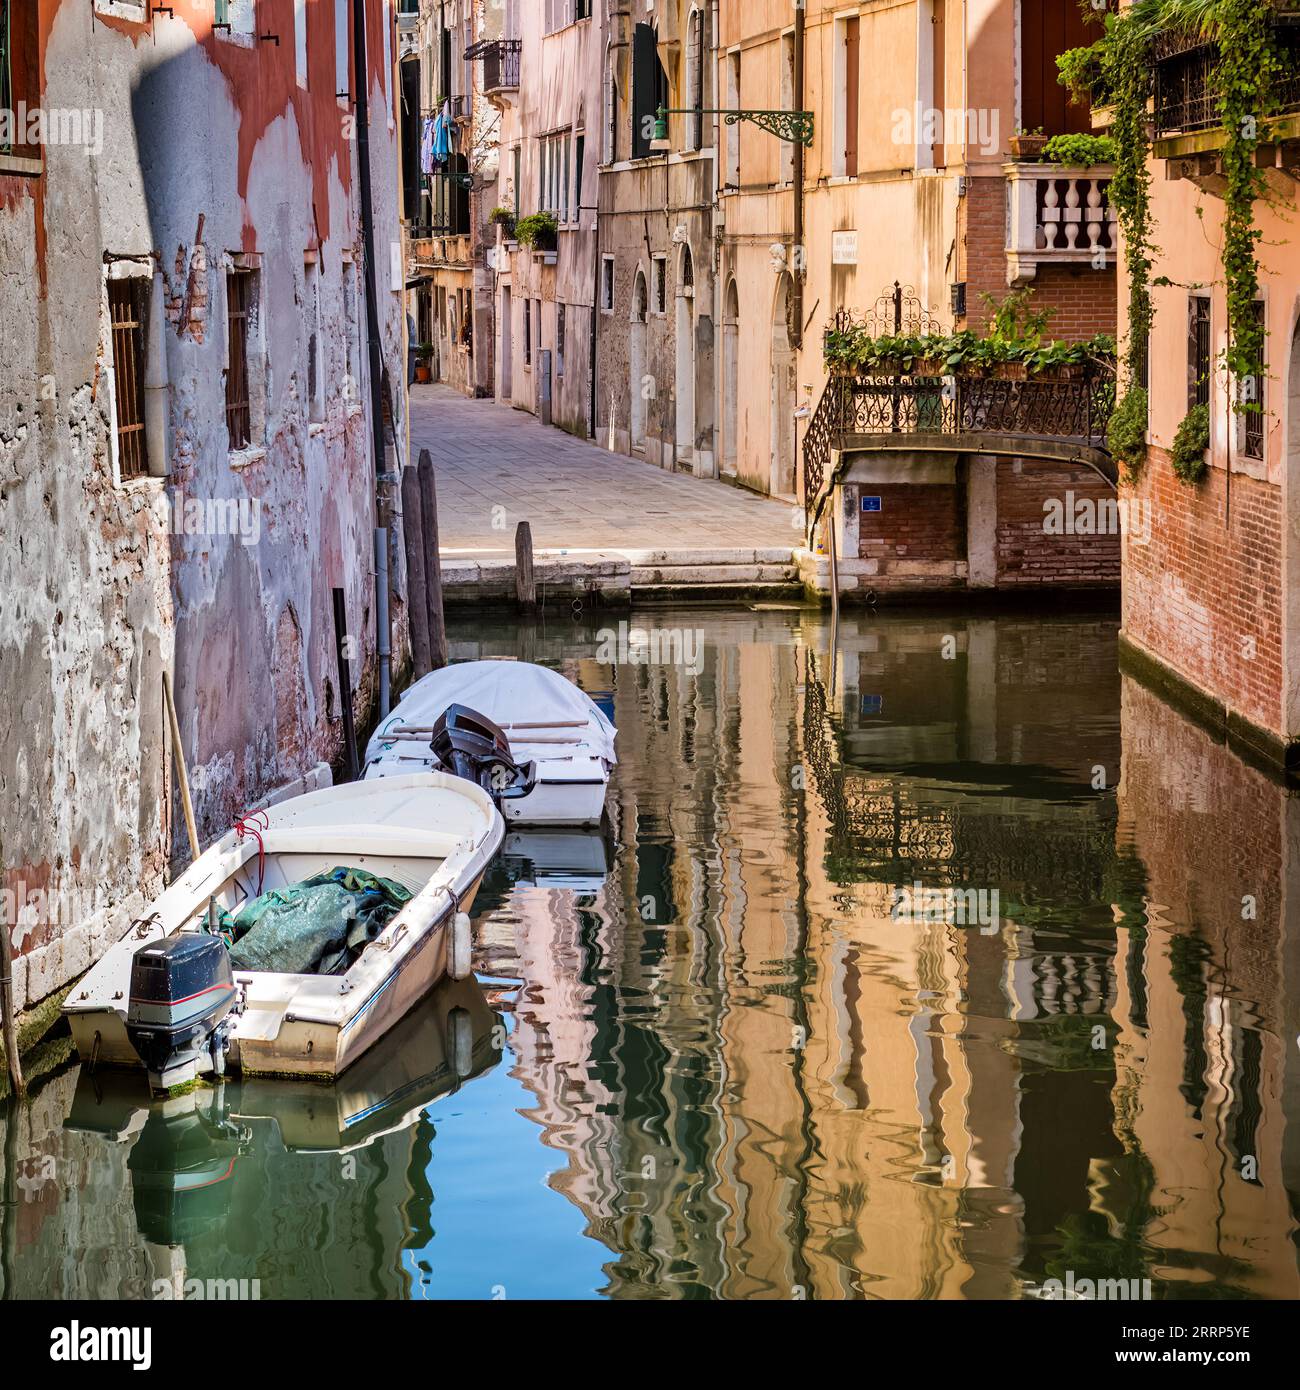 View of Rio del Frari canal in Venice Italy. Stock Photo